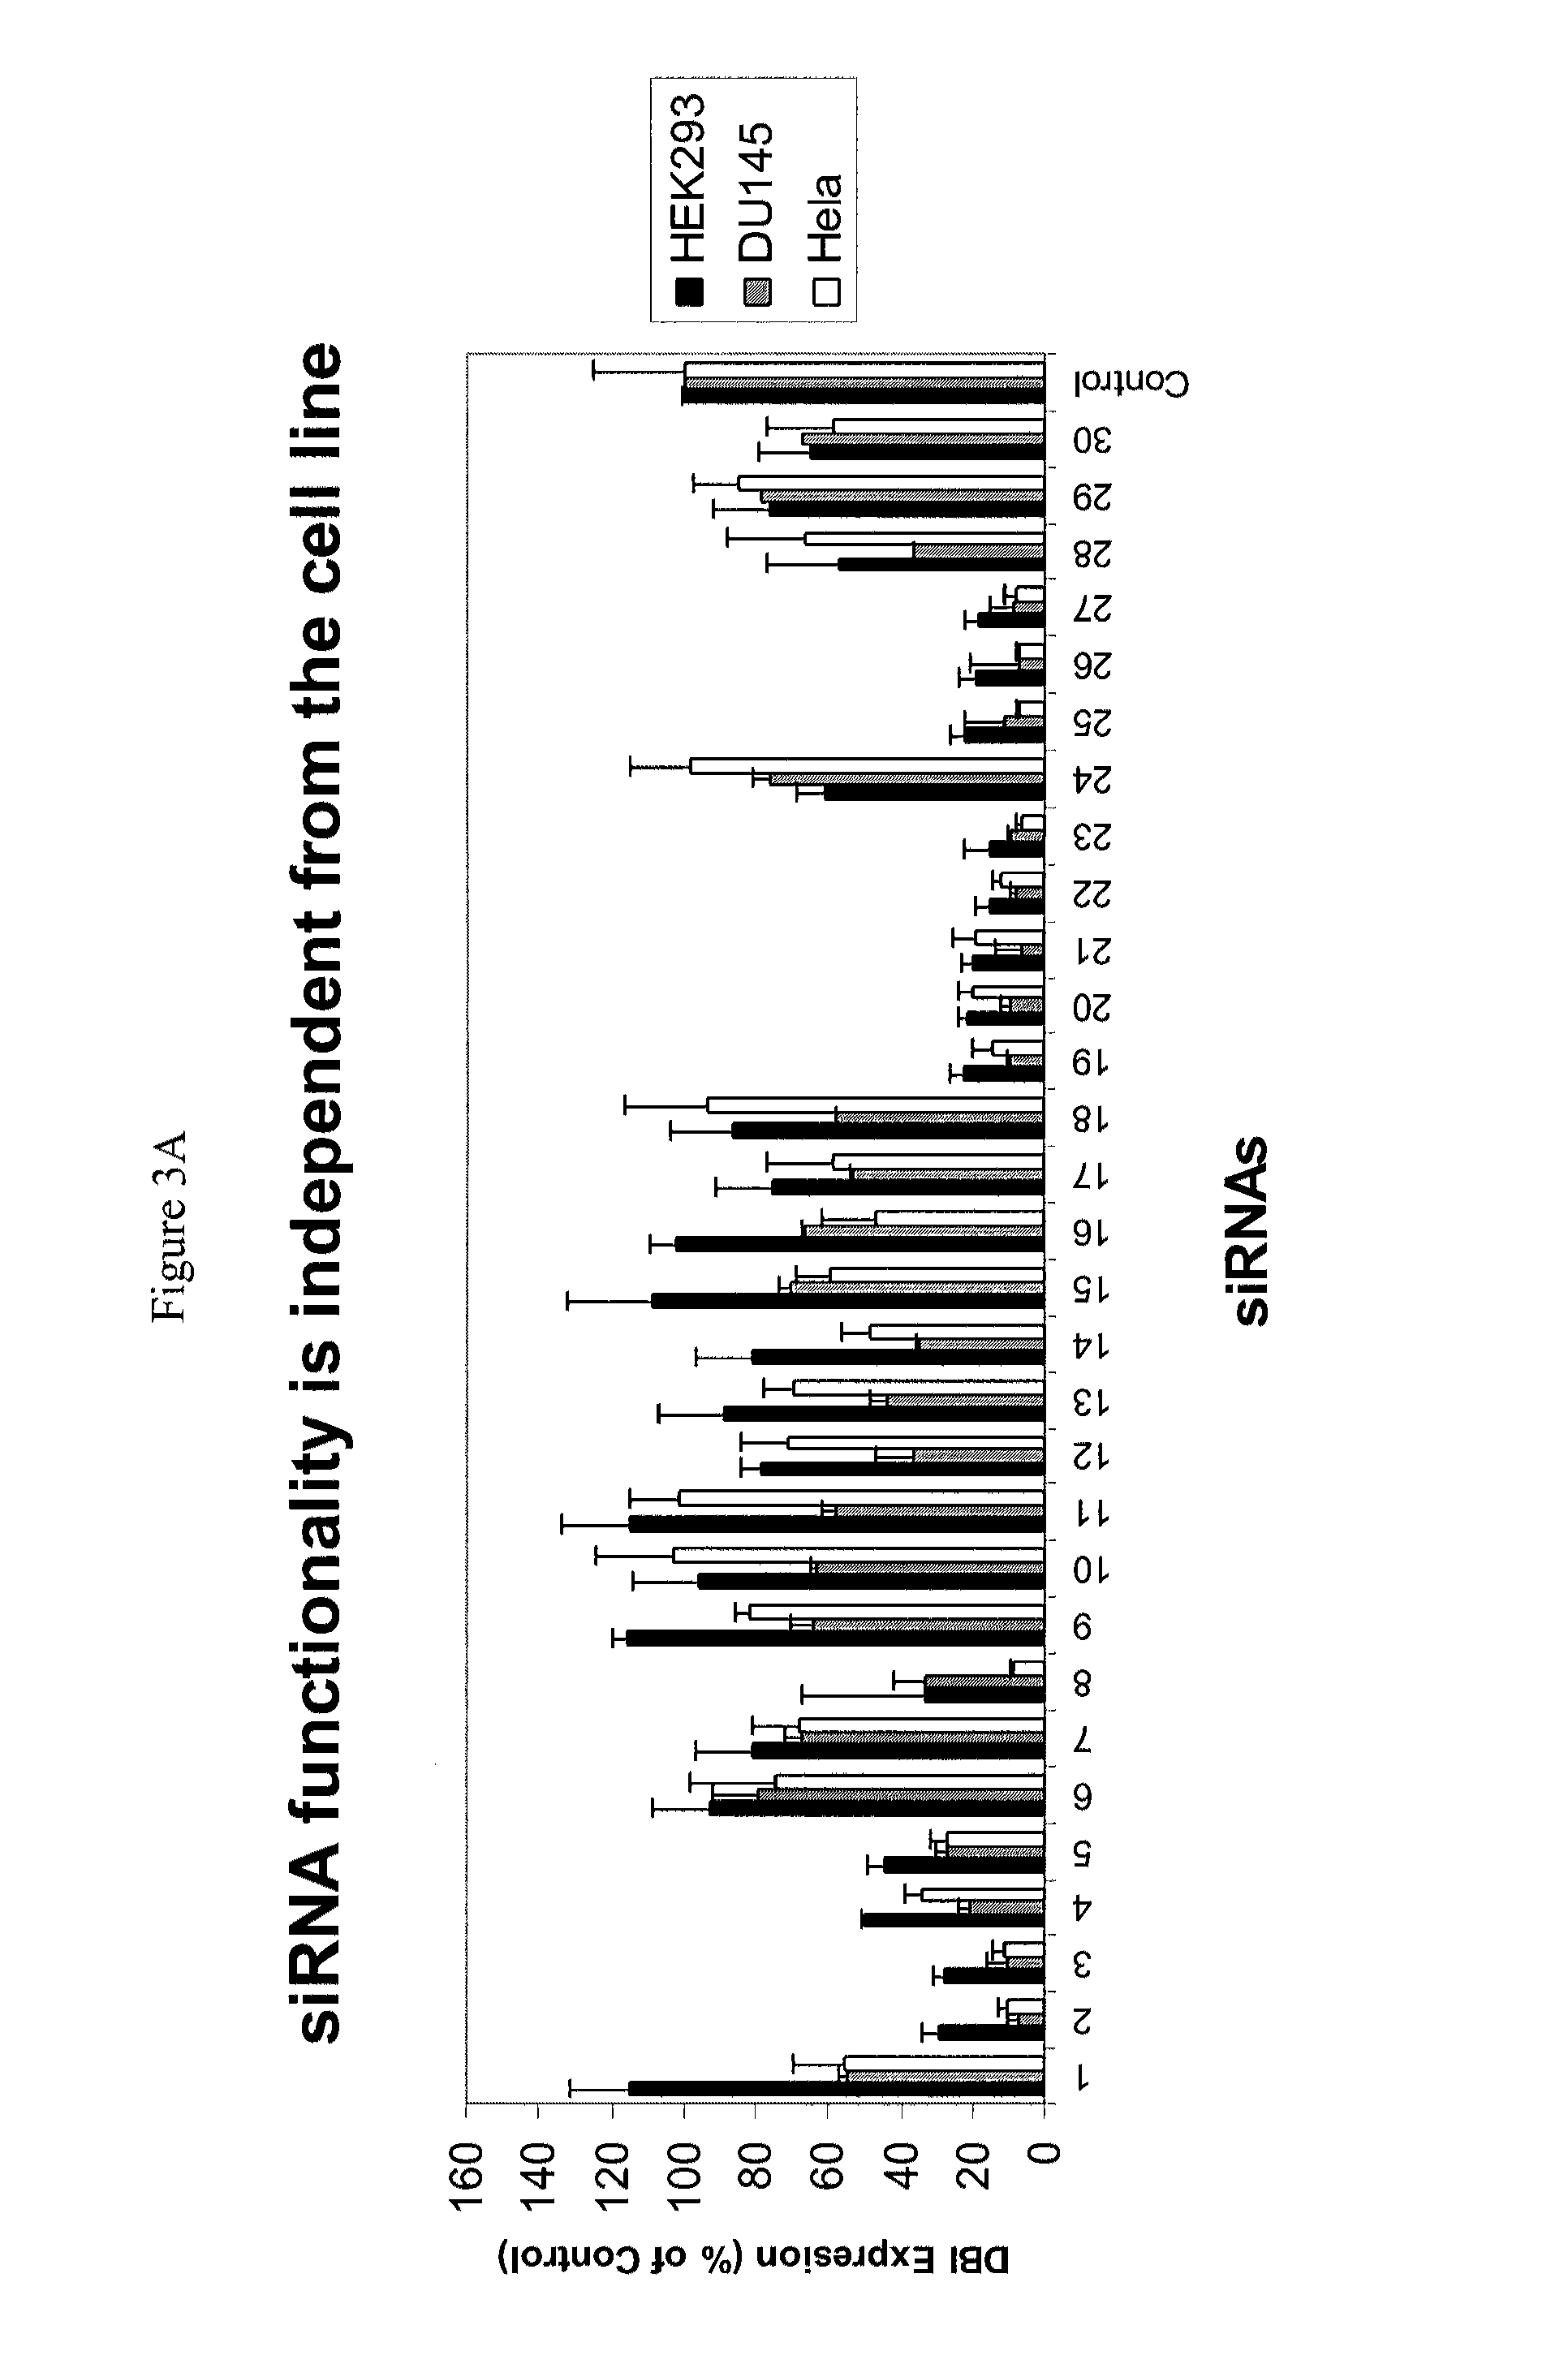 SiRNA targeting catenin, beta-1 (CTNNB1)